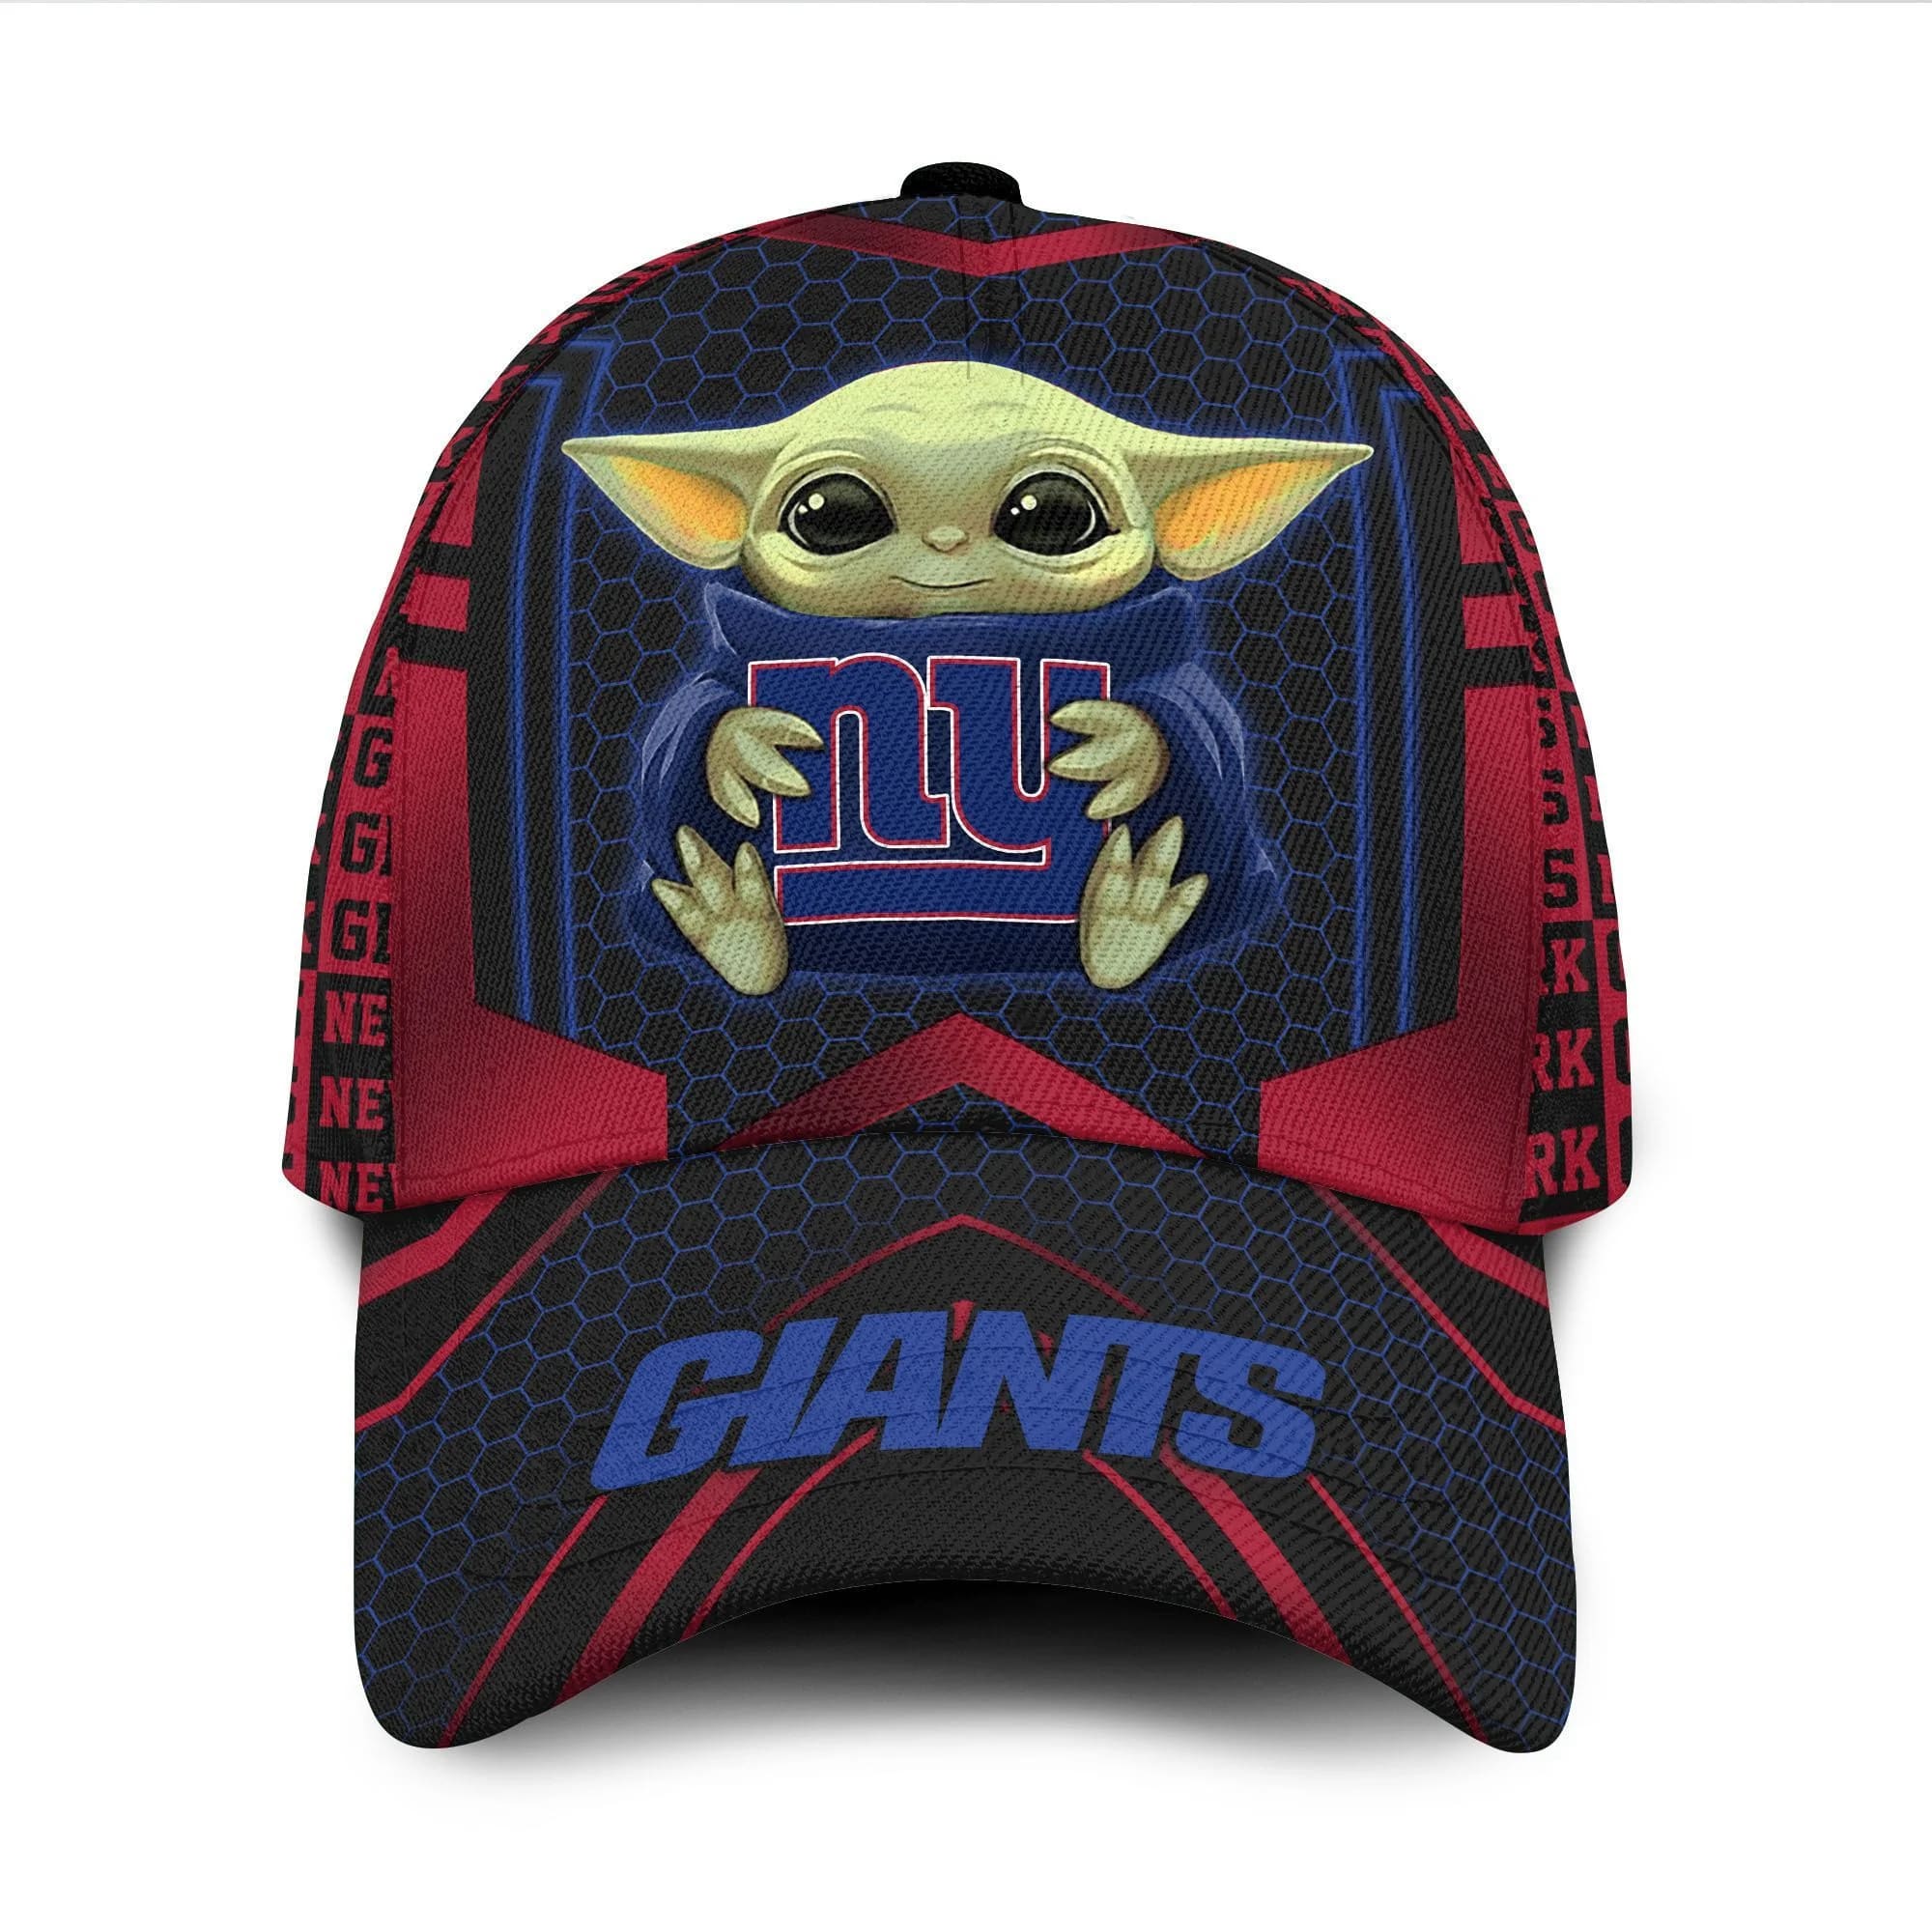 New York Giants Baby Yoda All Over Print 3D Baseball Cap Nih1cq